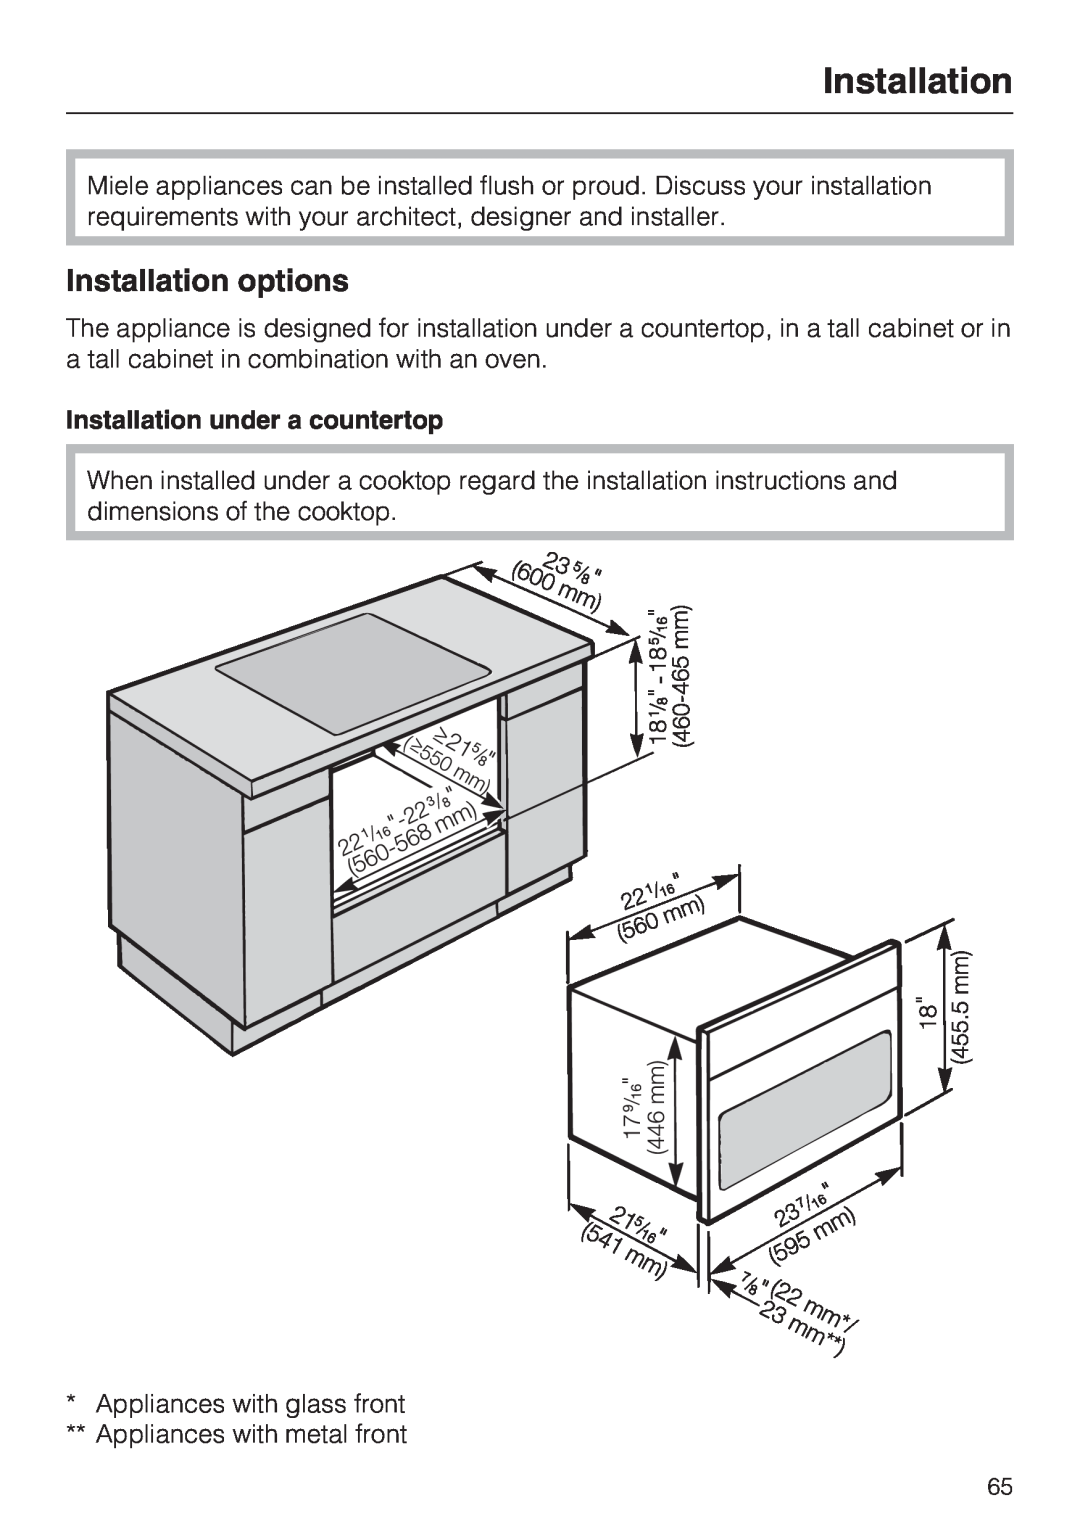 Miele H 4084 BM, H 4086 BM installation instructions Installation options, Installation under a countertop 